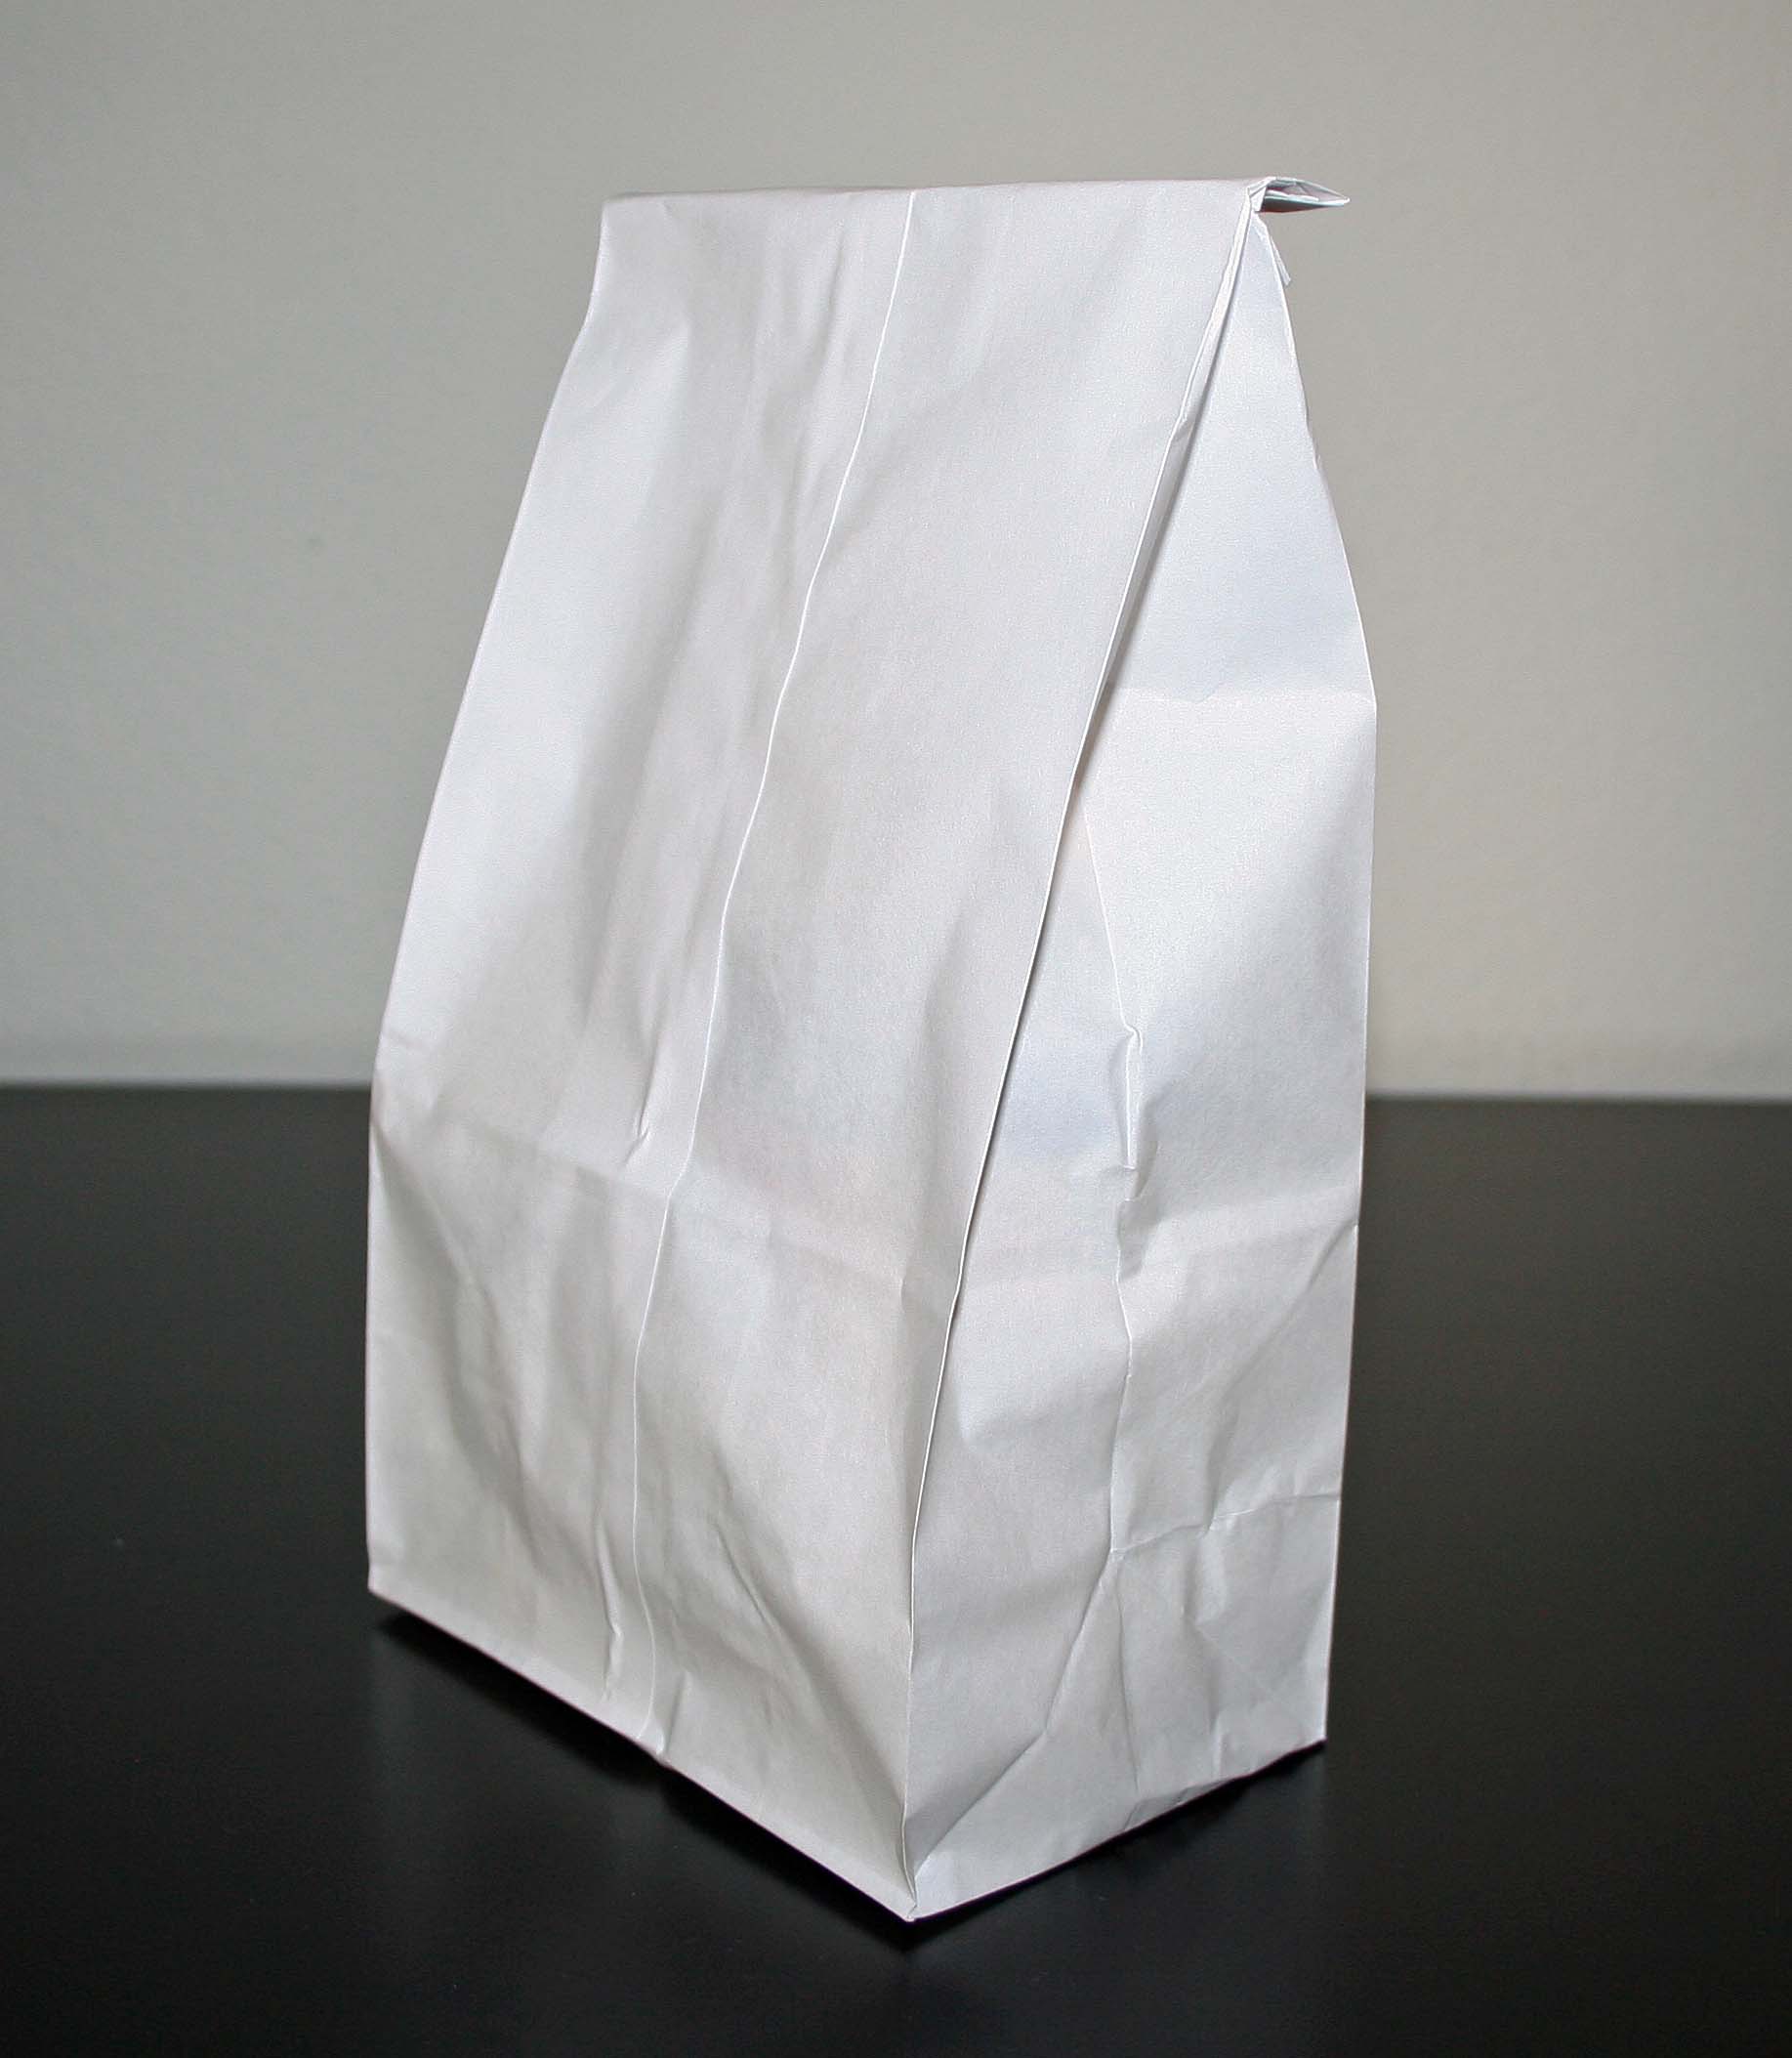 White paper bag on white and black background